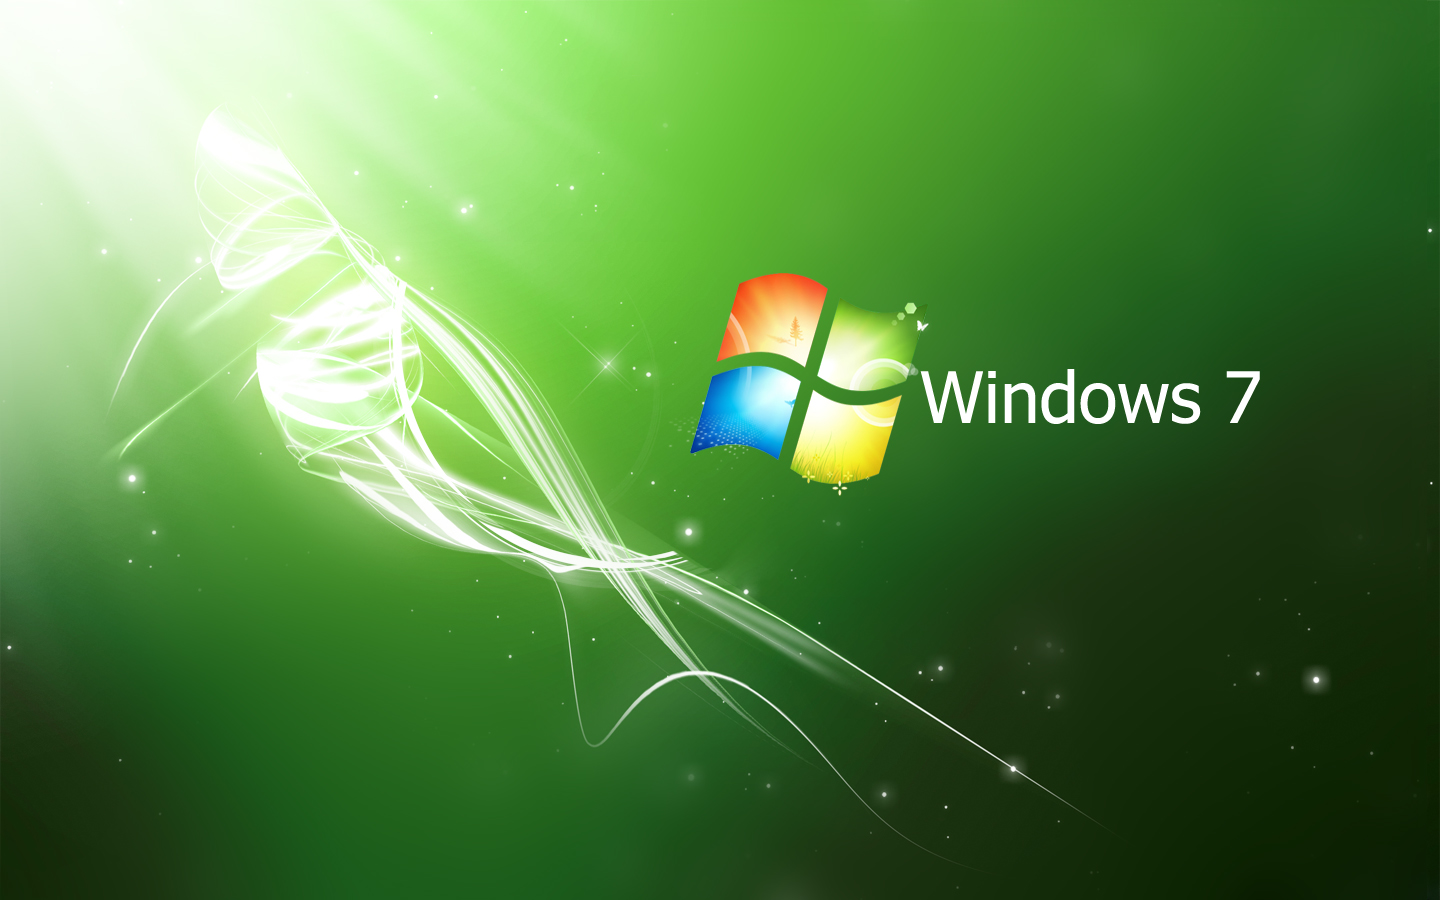 http://4.bp.blogspot.com/-qLSLiVhQtlU/Tcww2TiPAcI/AAAAAAAAAl0/cOF_RIEDCk0/s1600/Windows+7+Green+HD+Wallpaper.jpg